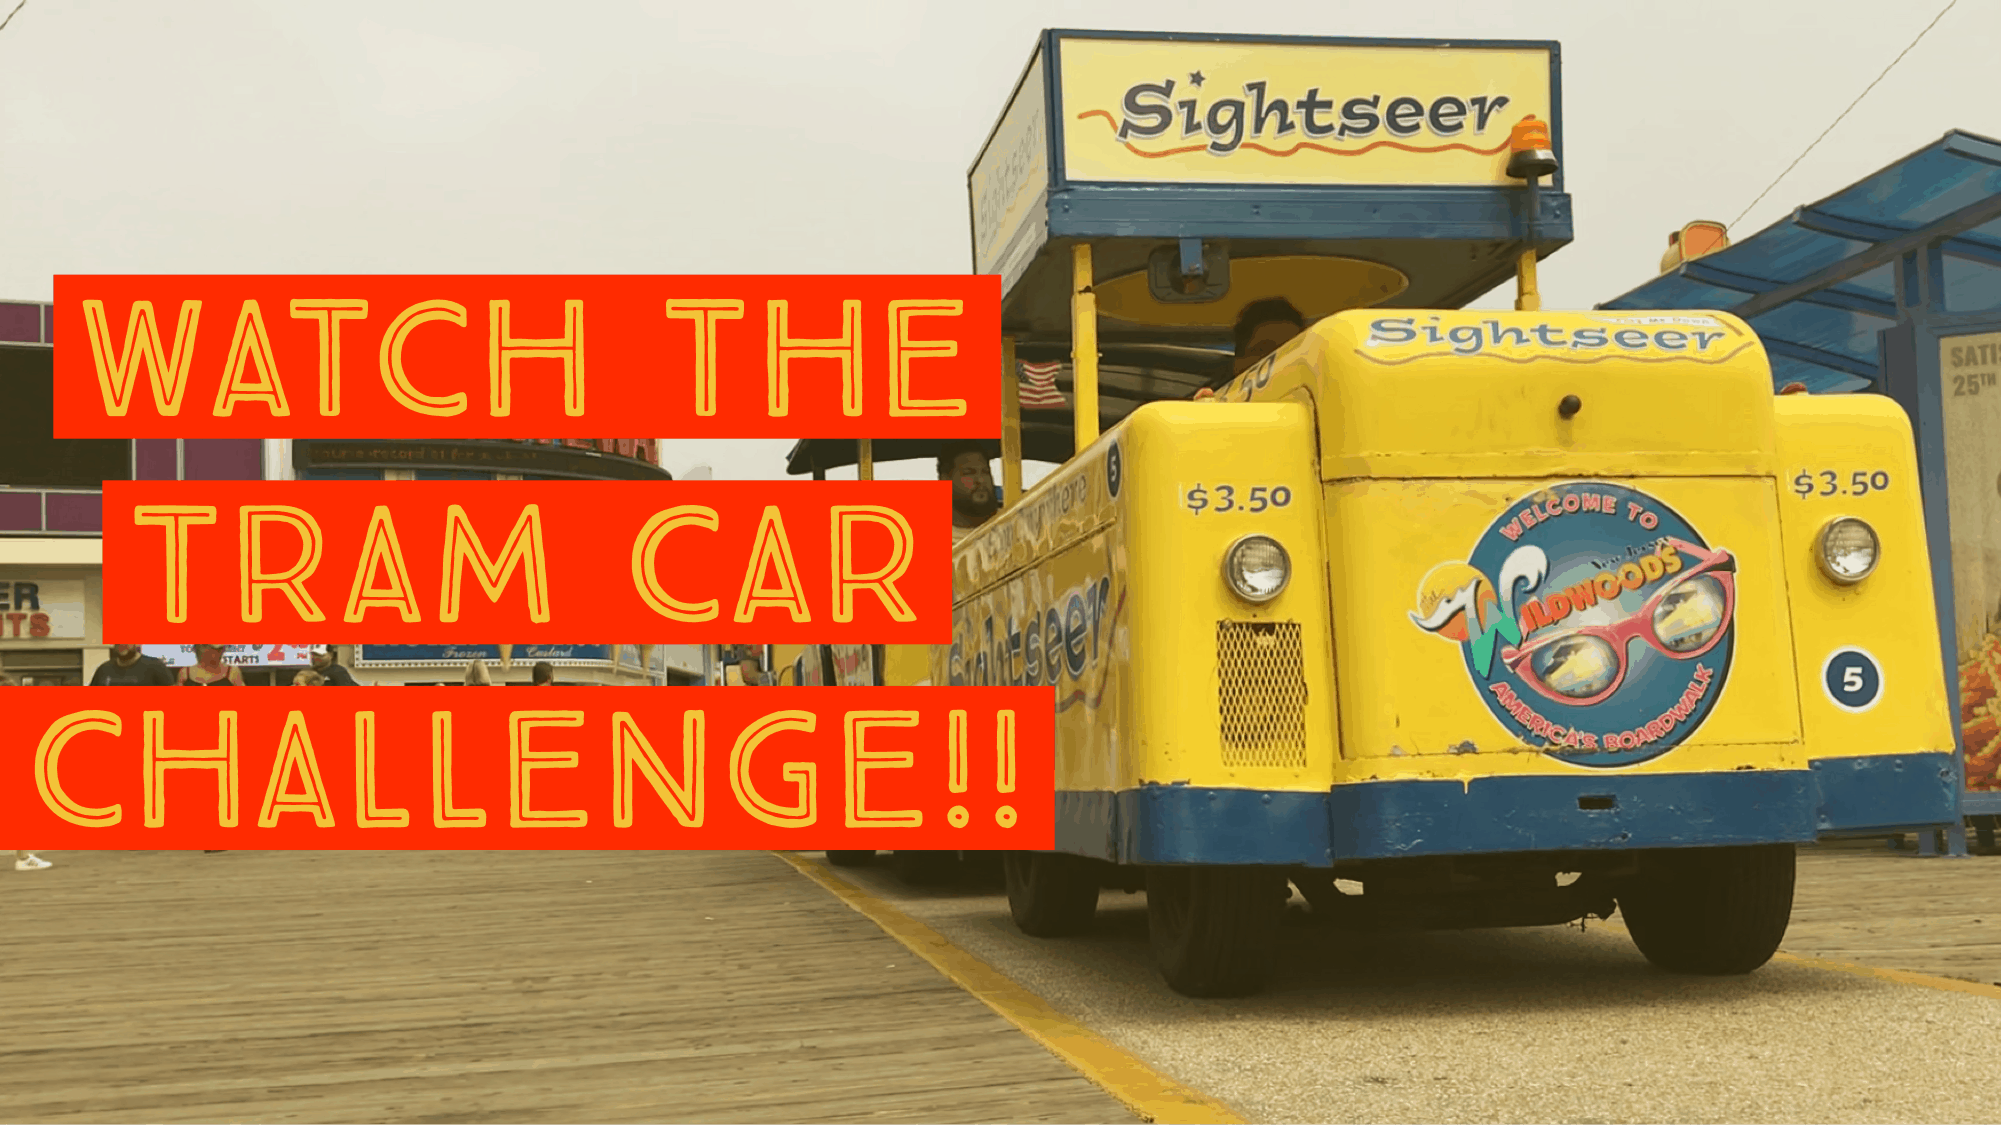 Watch The Tram Car Please Challenge!